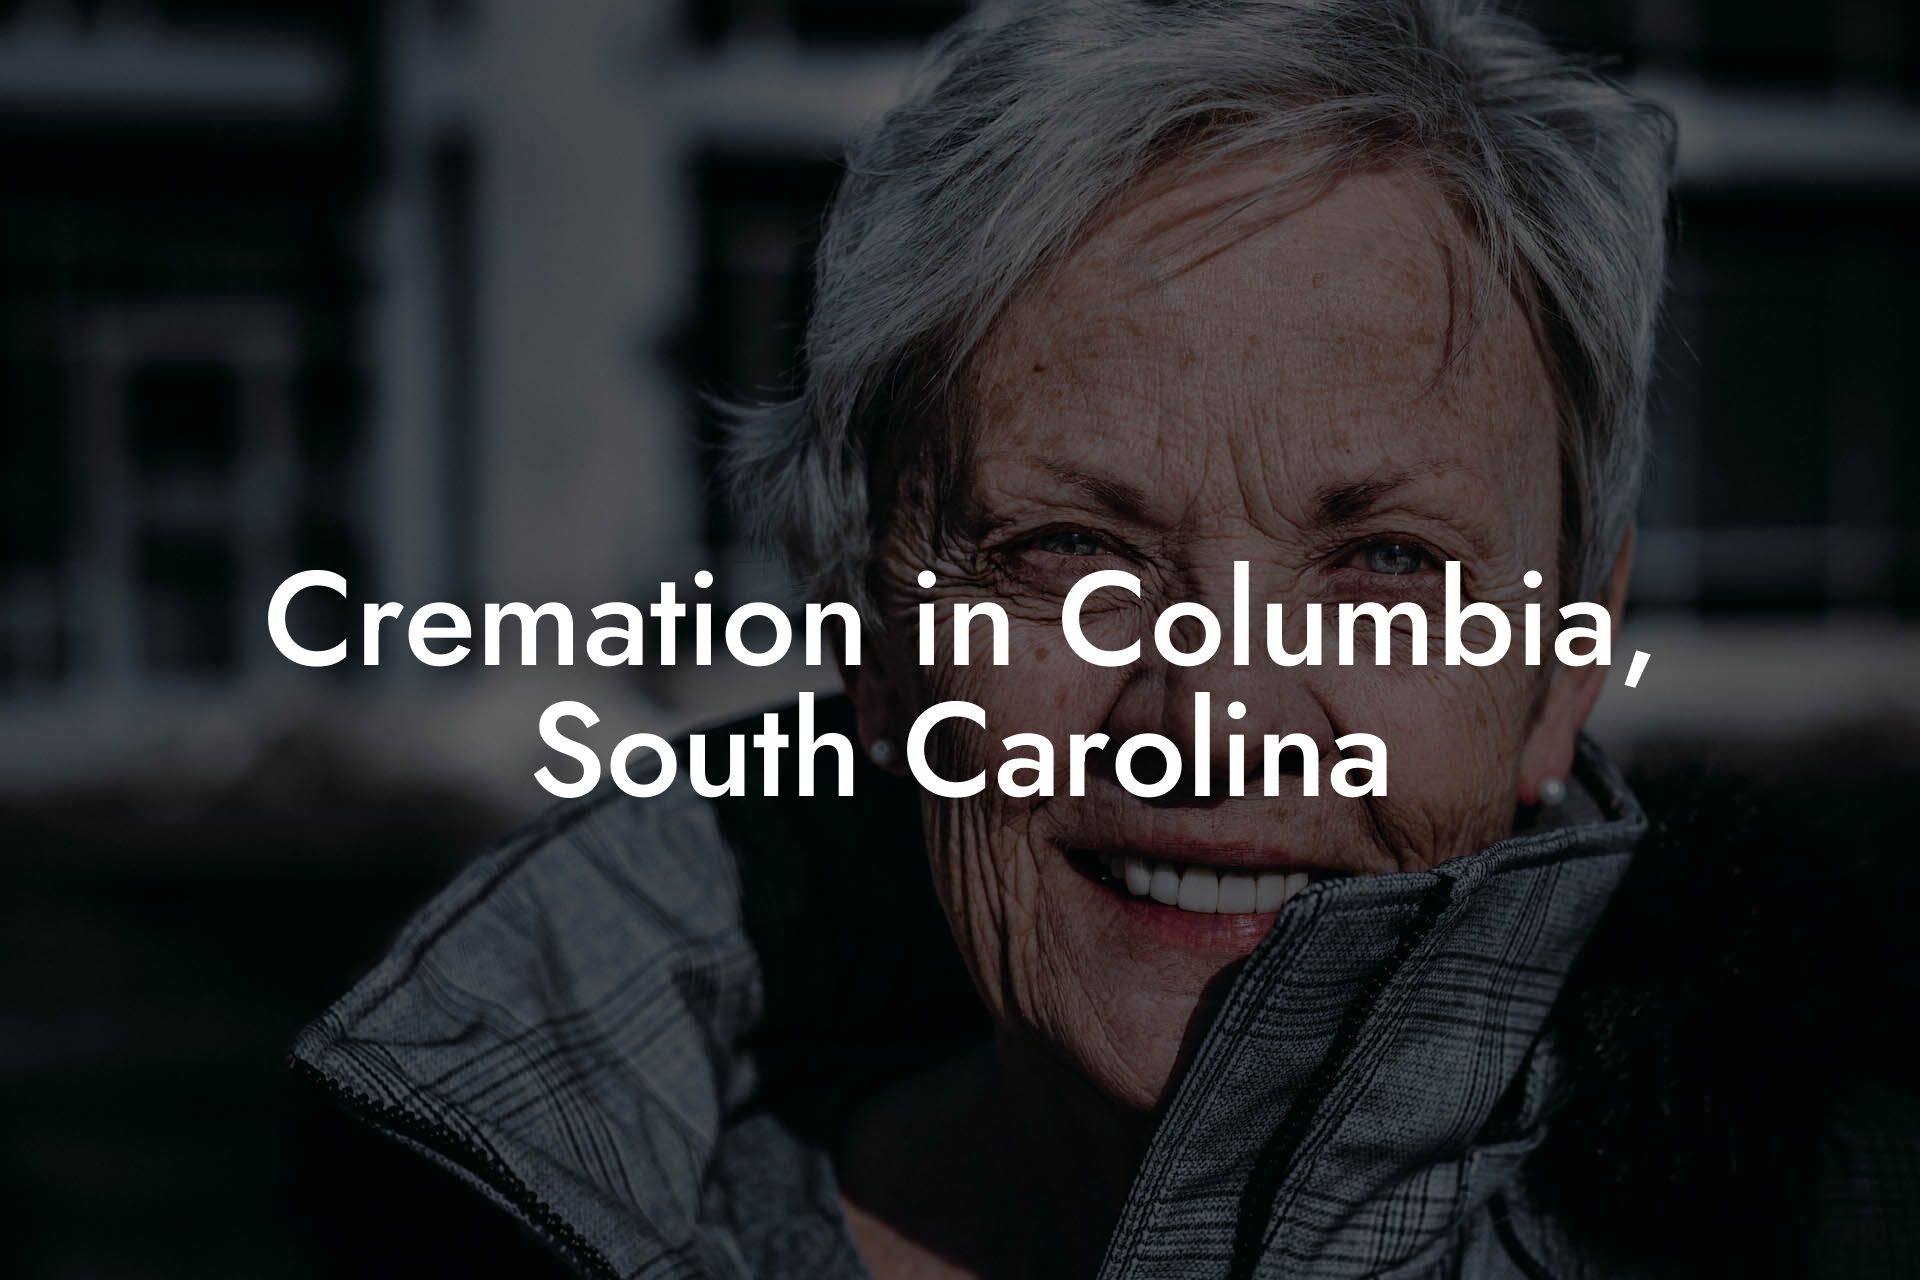 Cremation in Columbia, South Carolina